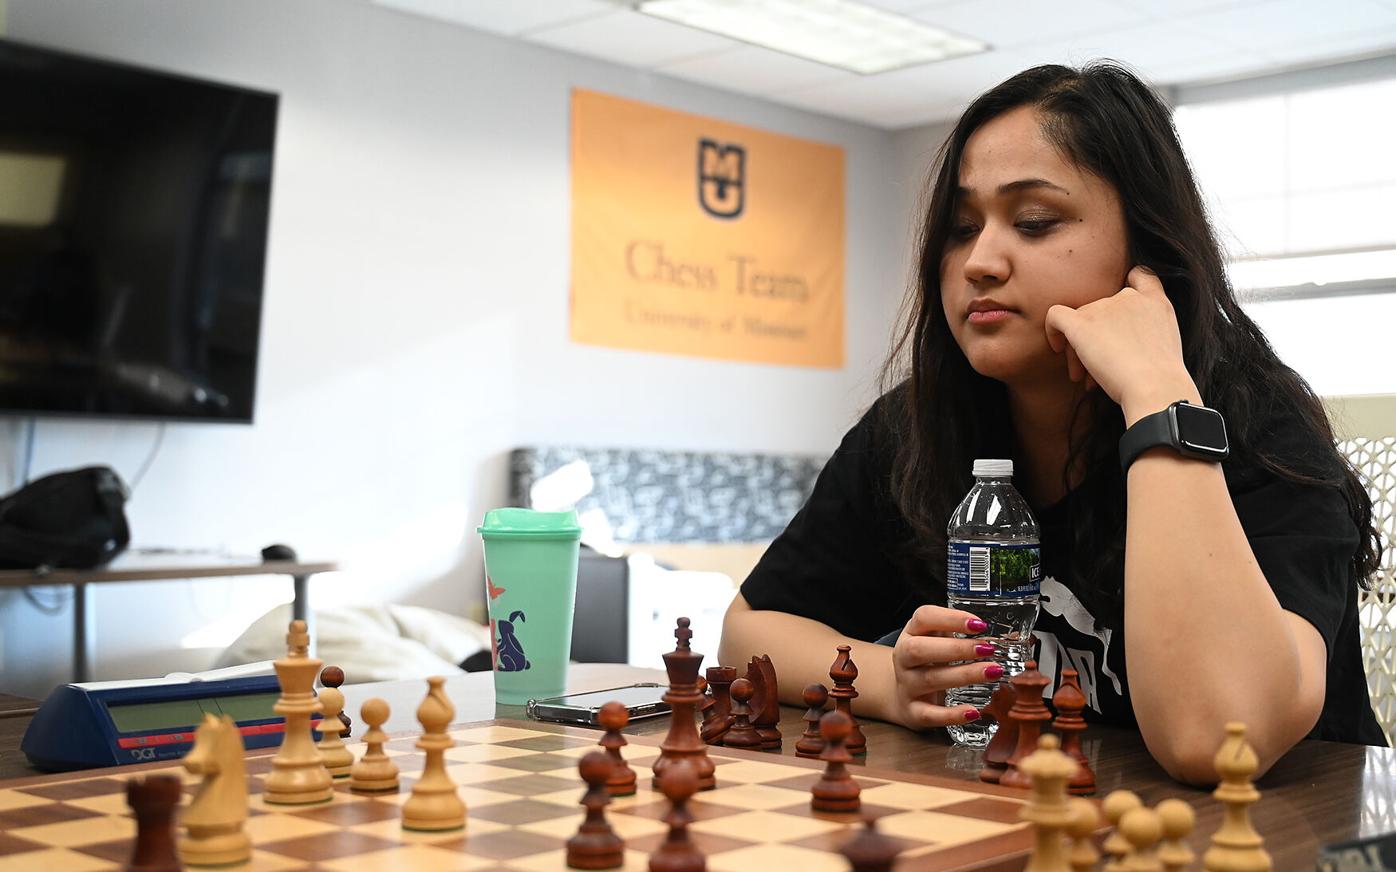 CHESS NEWS BLOG: : First International Chess Tournament held  in Guam